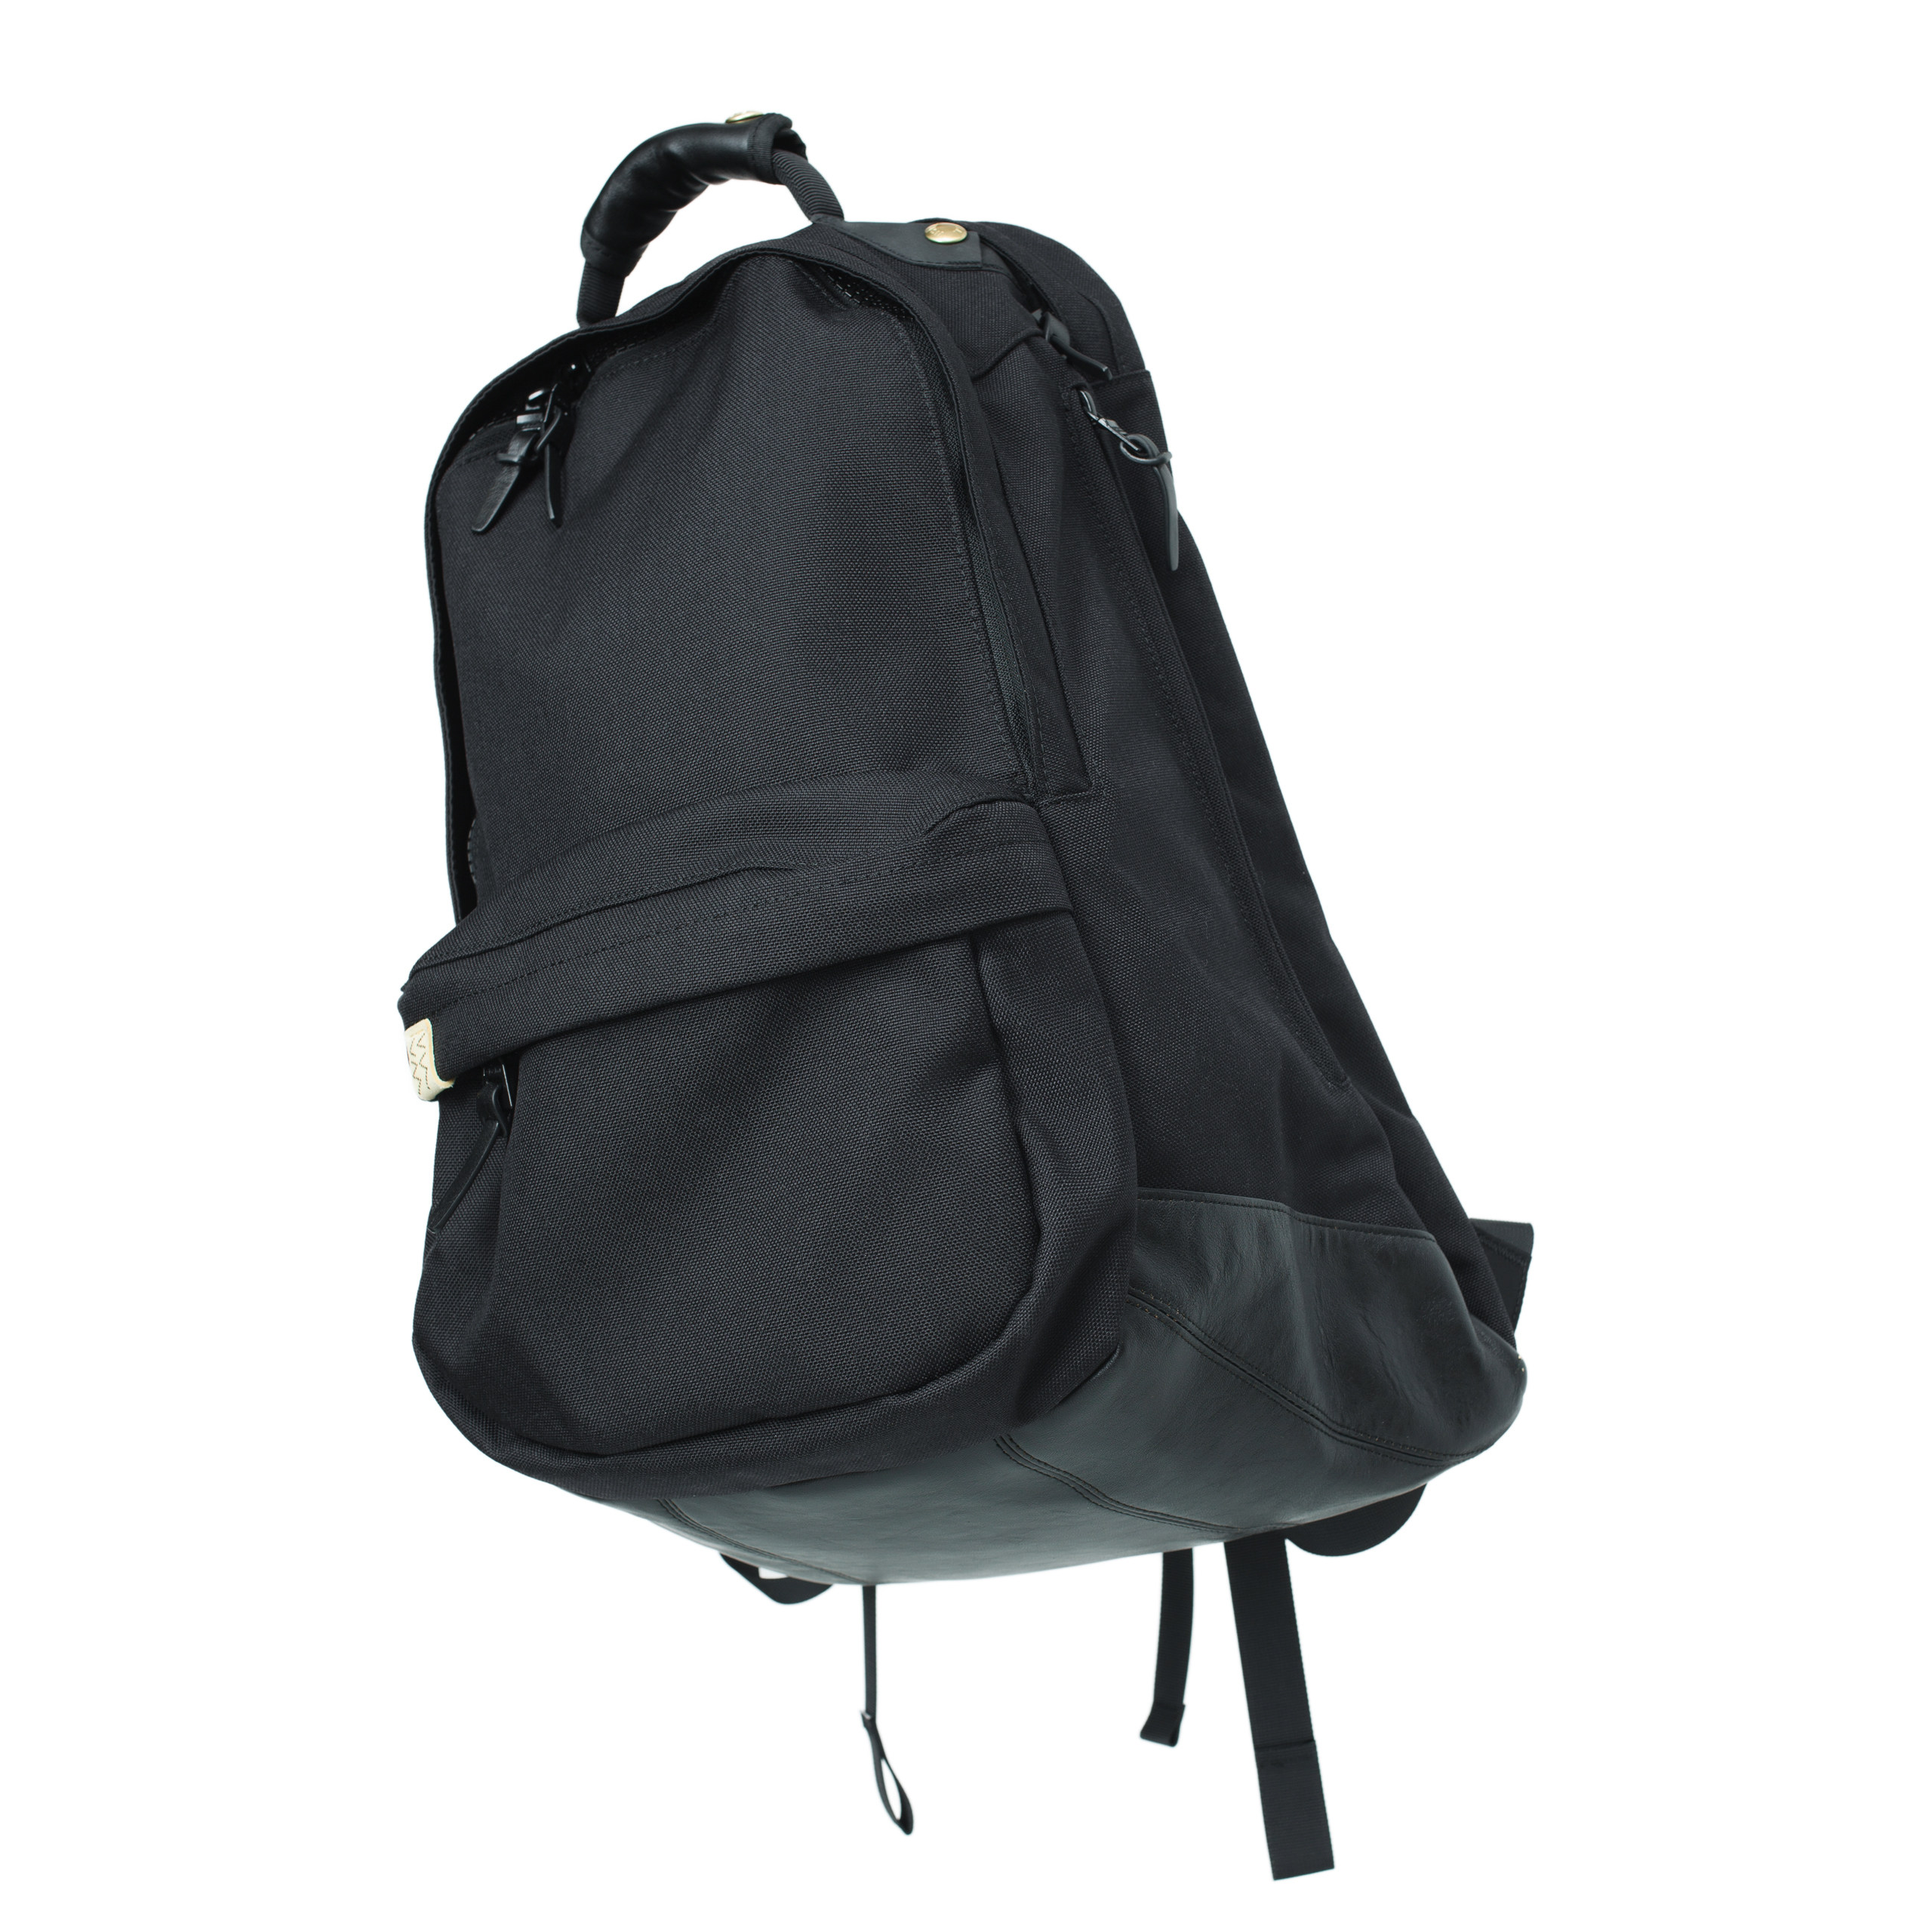 Комбинированный рюкзак Cordura 22L visvim 0123103003032/BLACK, размер One Size 0123103003032/BLACK - фото 3